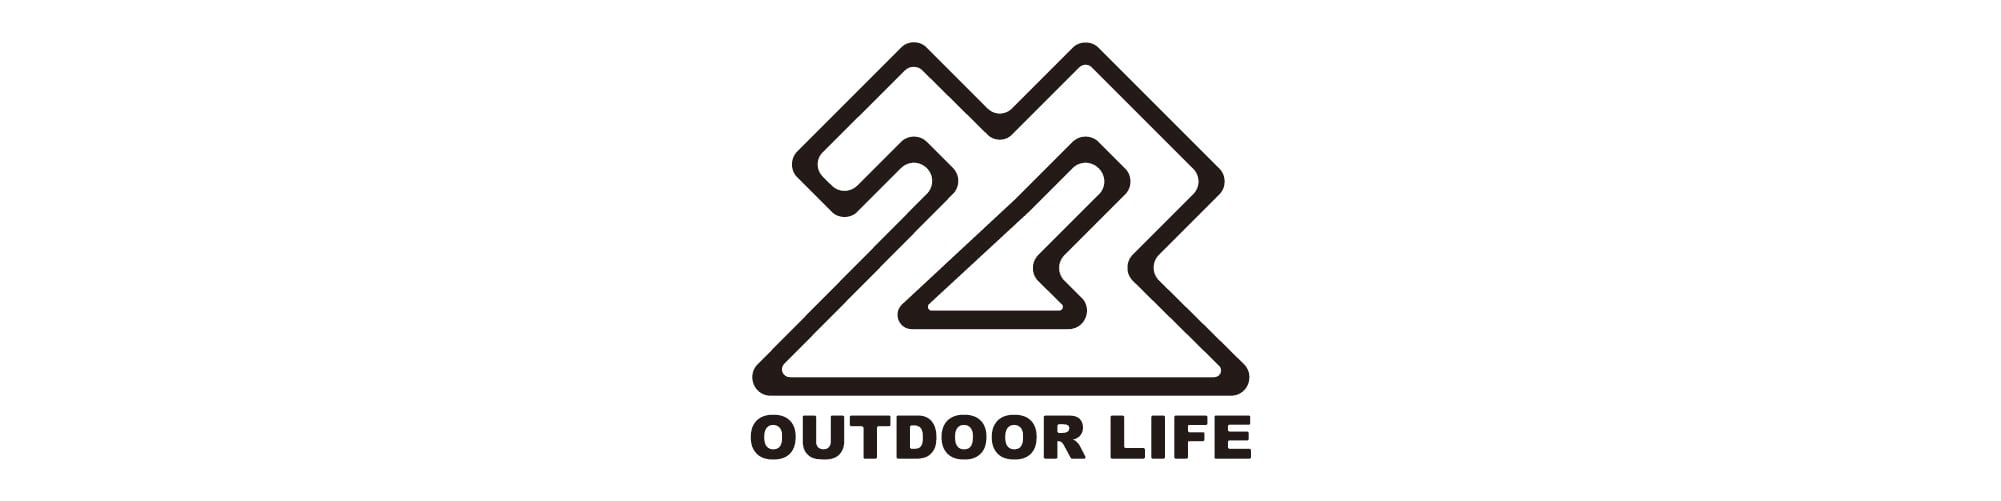 outdoor_life23